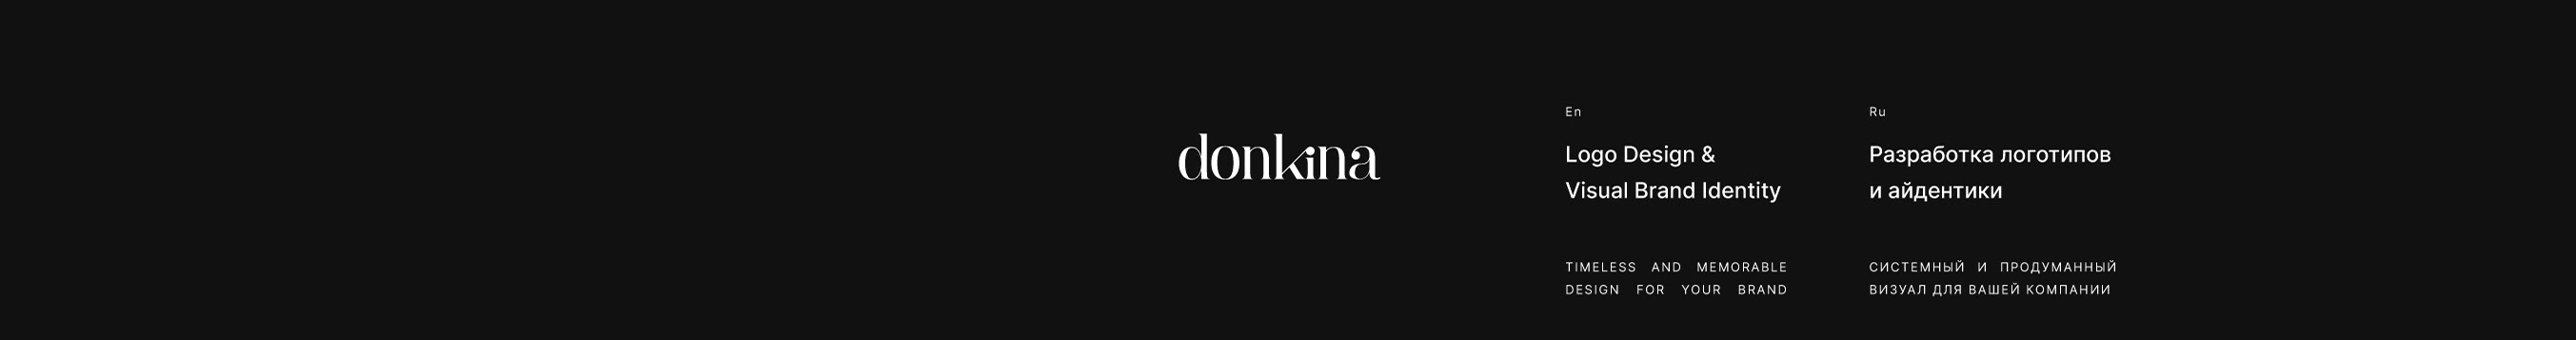 Olga Donkinas profilbanner